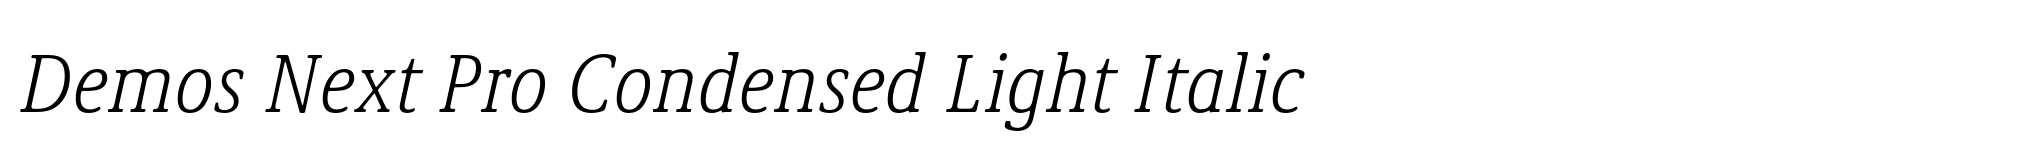 Demos Next Pro Condensed Light Italic image